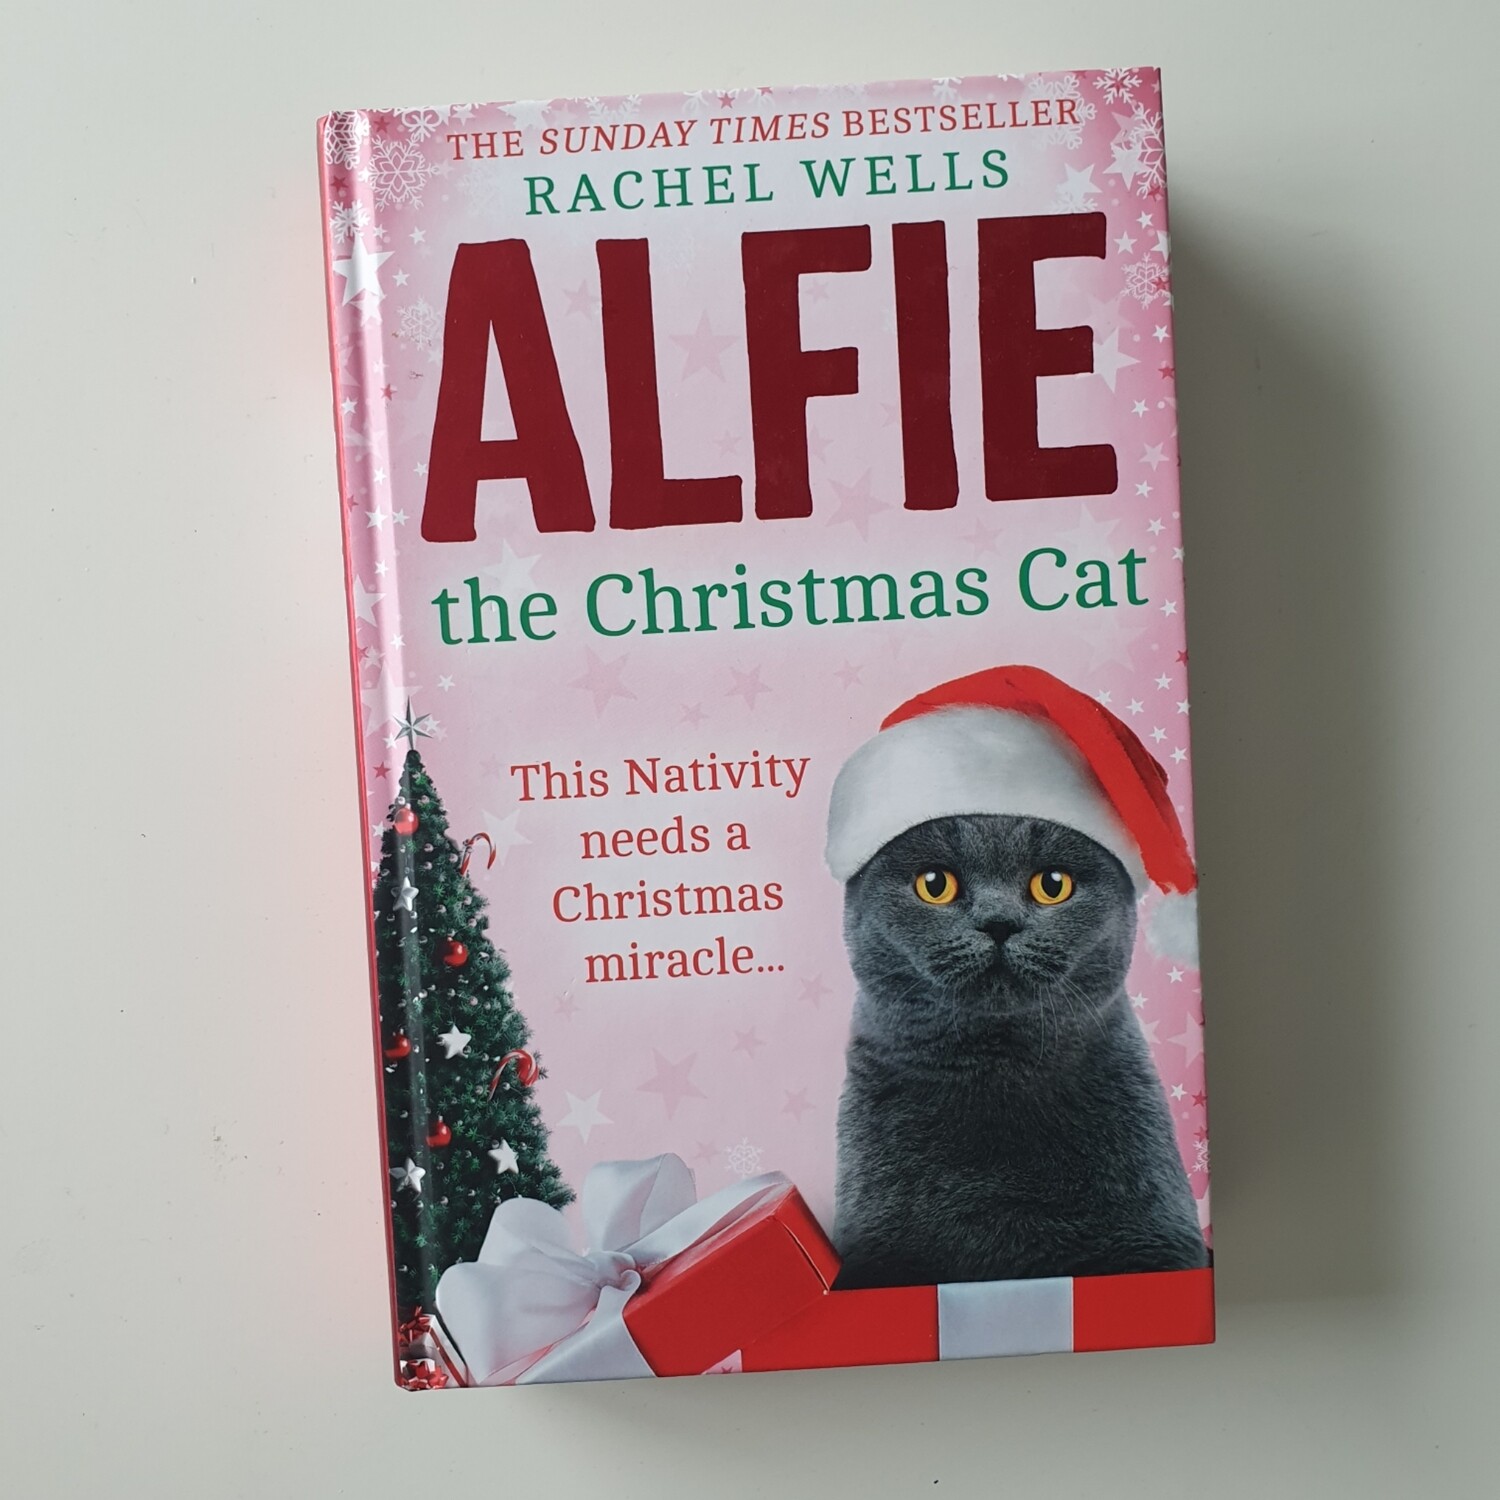 Alfie the Christmas Cat